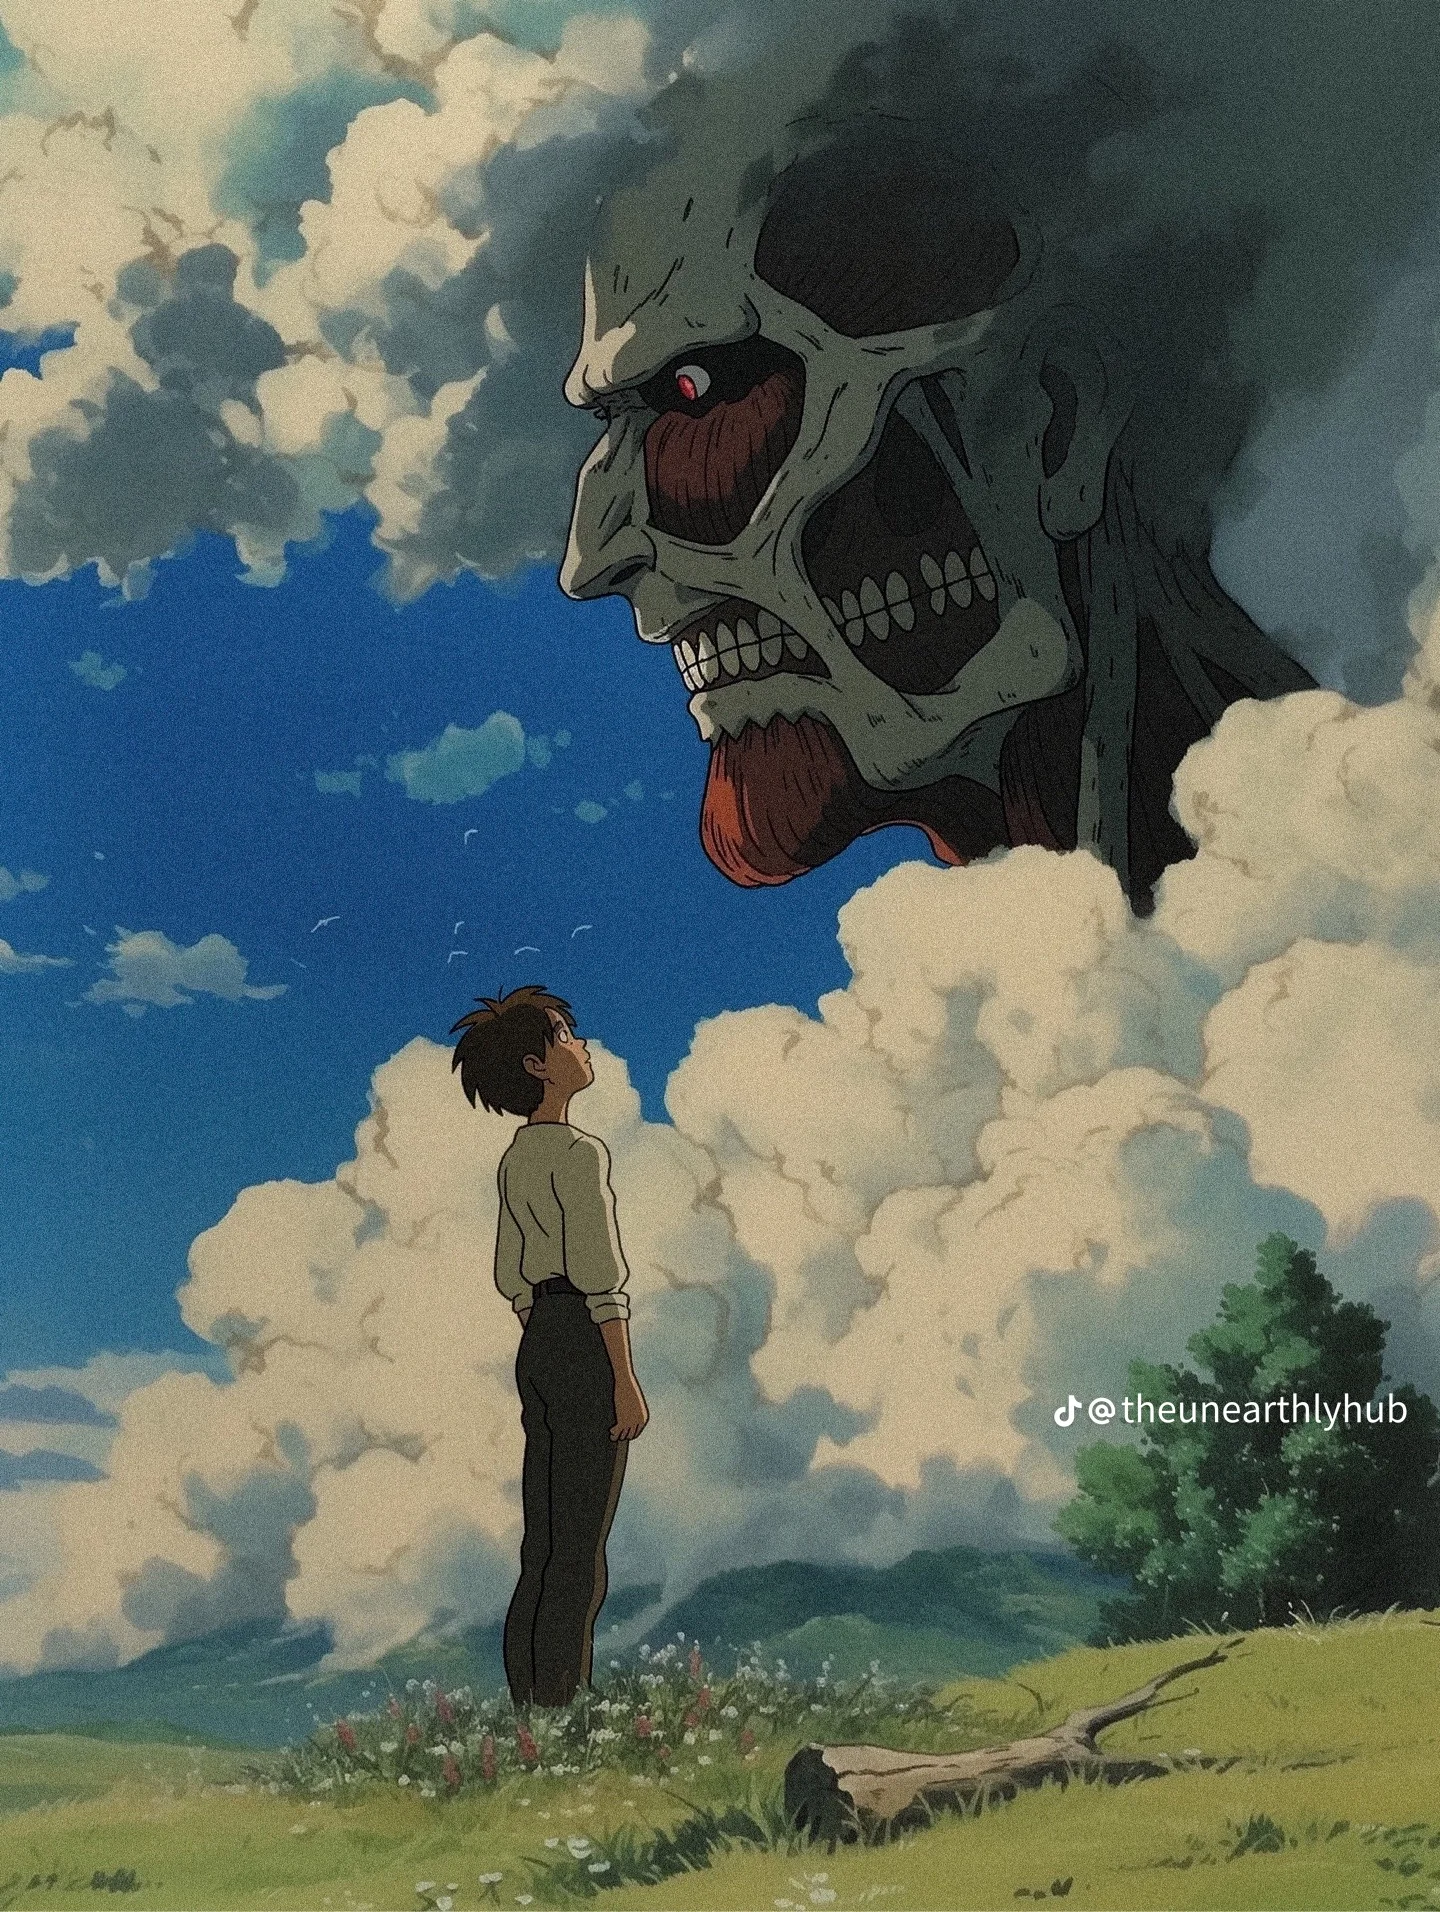 aiart ตัวละคร Attack on Titan อนิเมะ Studio Ghibli